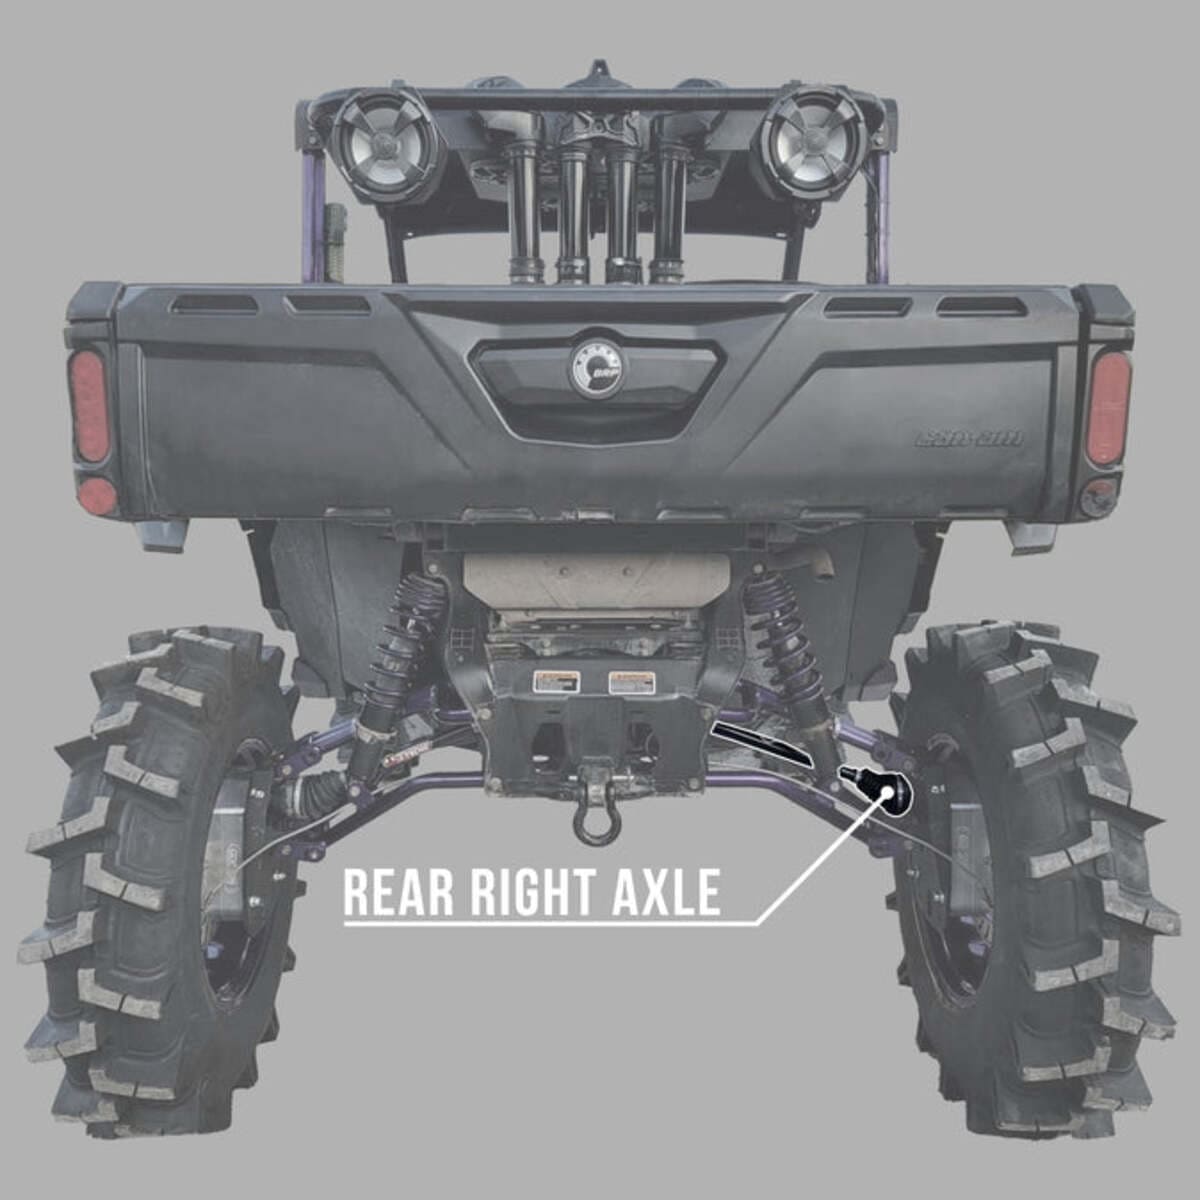 Demon Powersports '19 Polaris RZR XP Turbo Demon Heavy Duty Lift Kit Axle